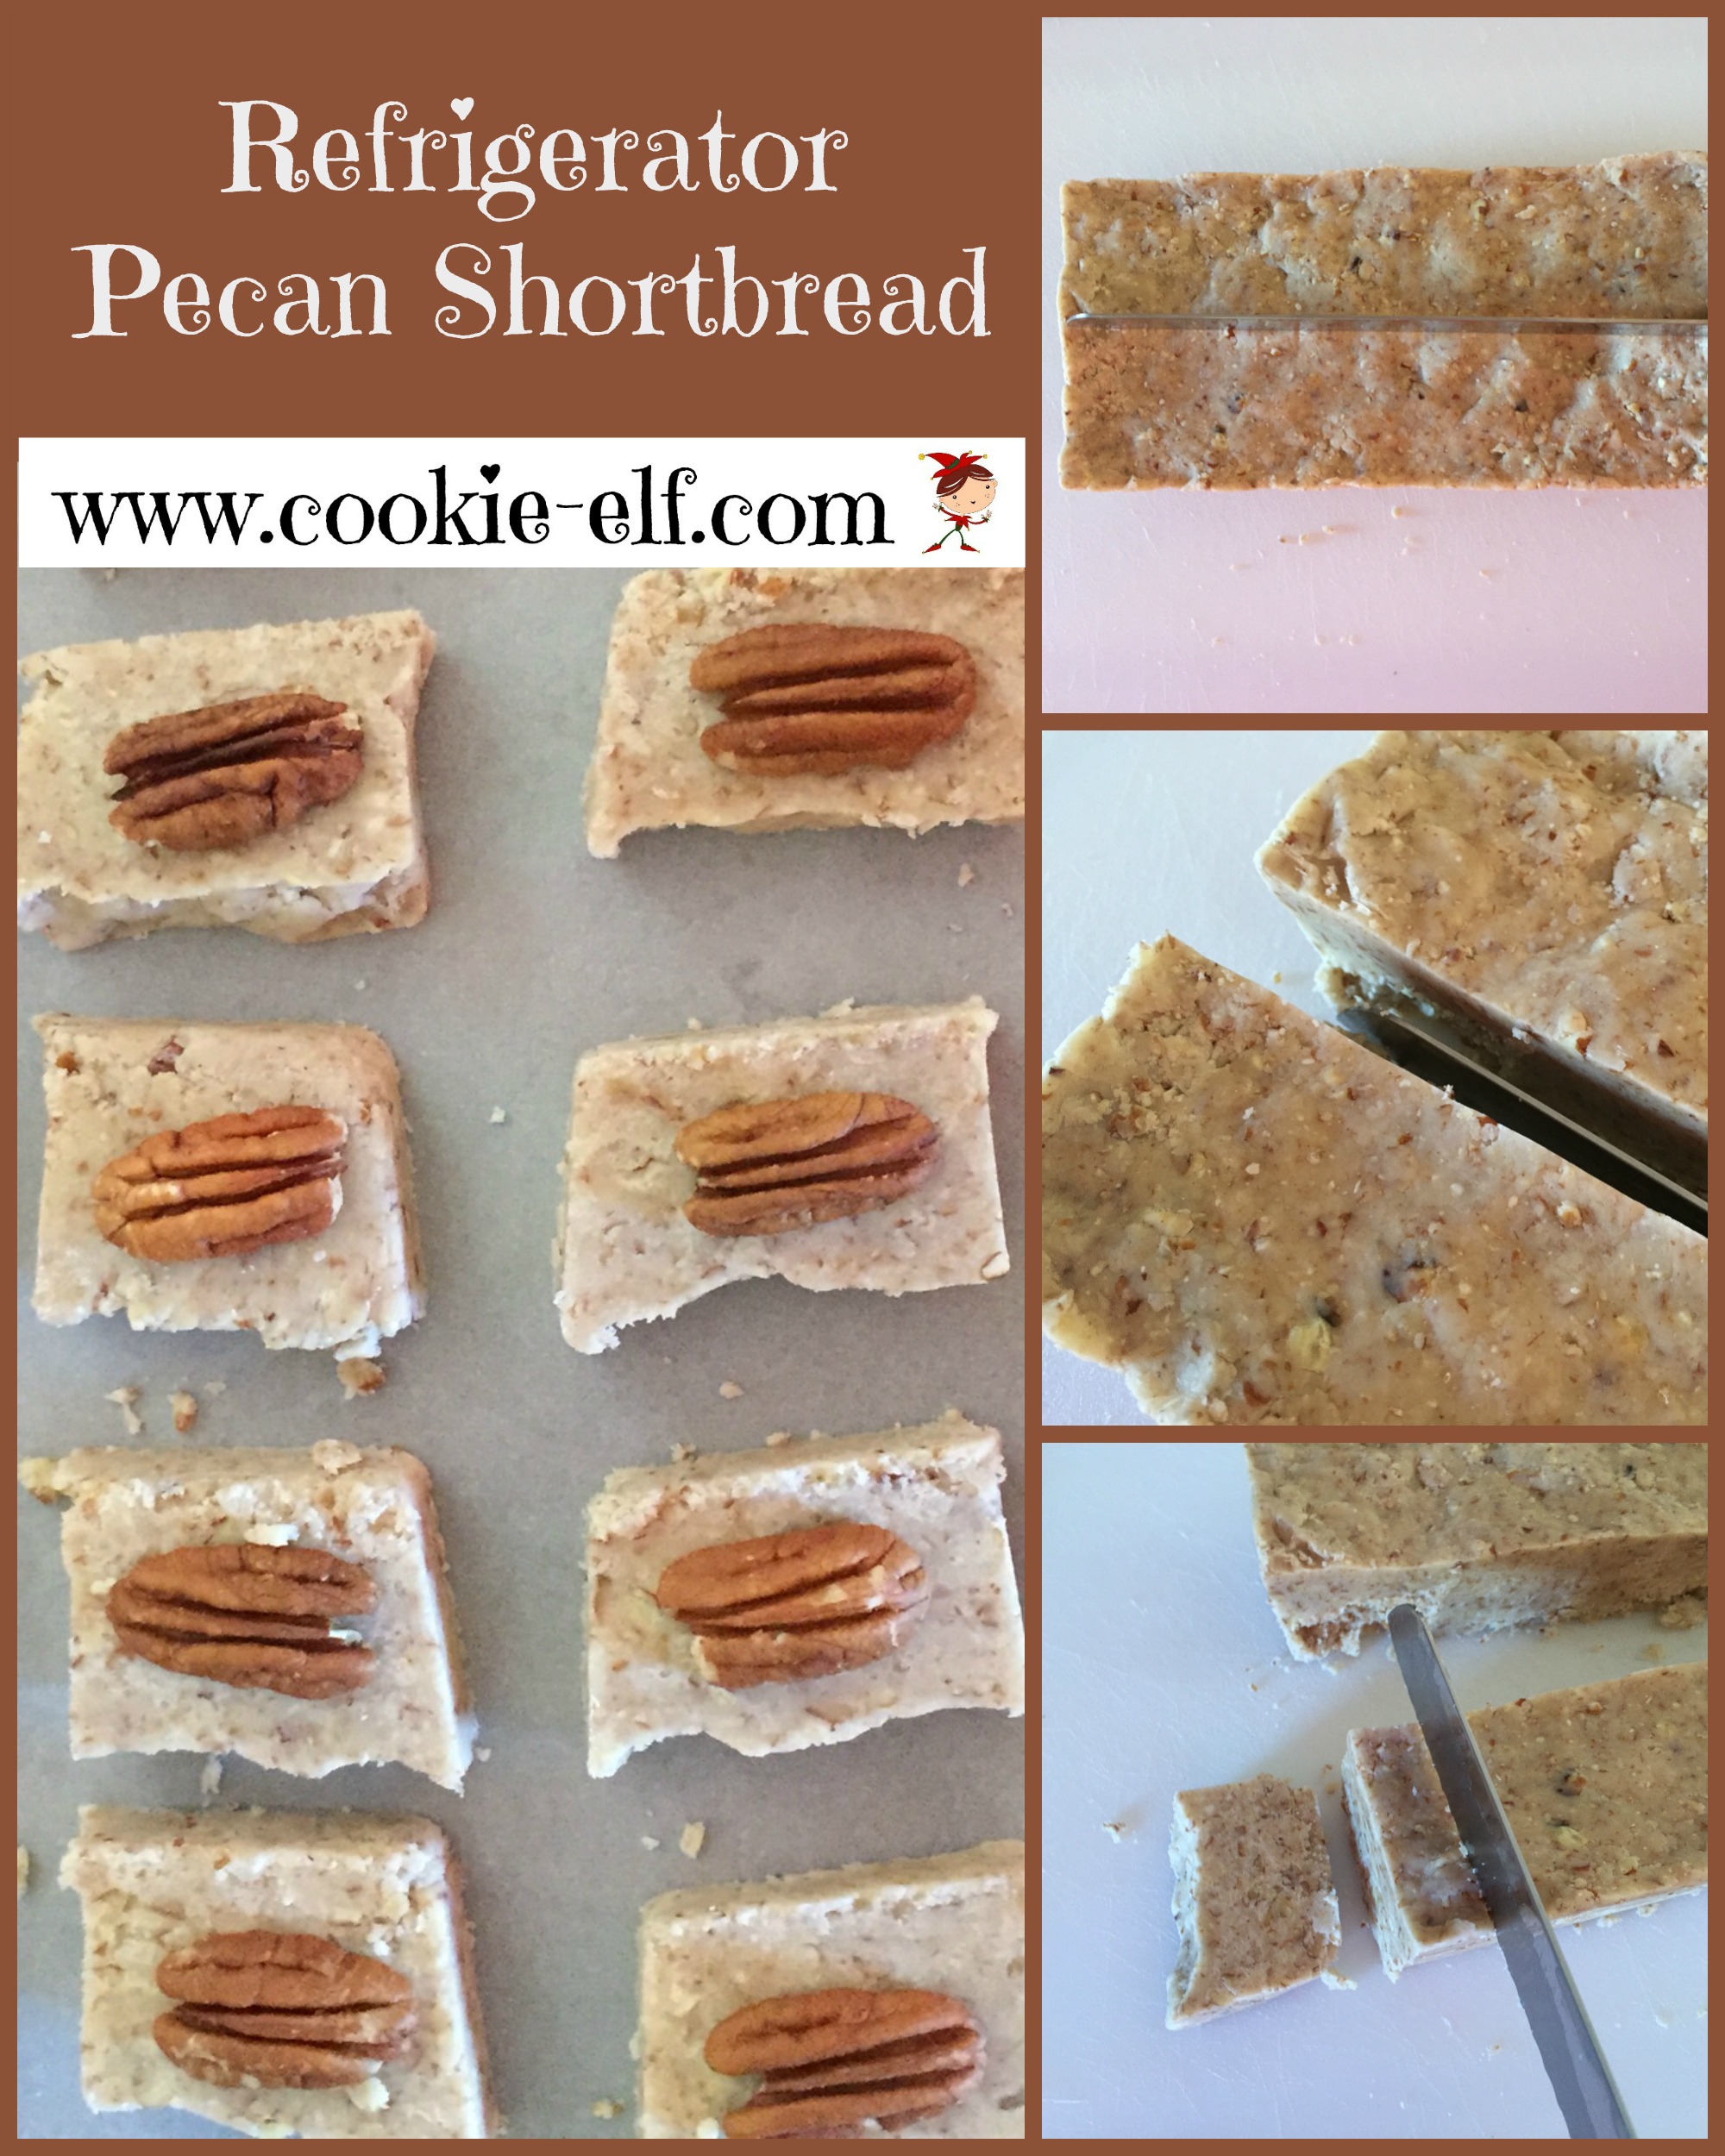 Refrigerator Pecan Shortbread from The Cookie Elf